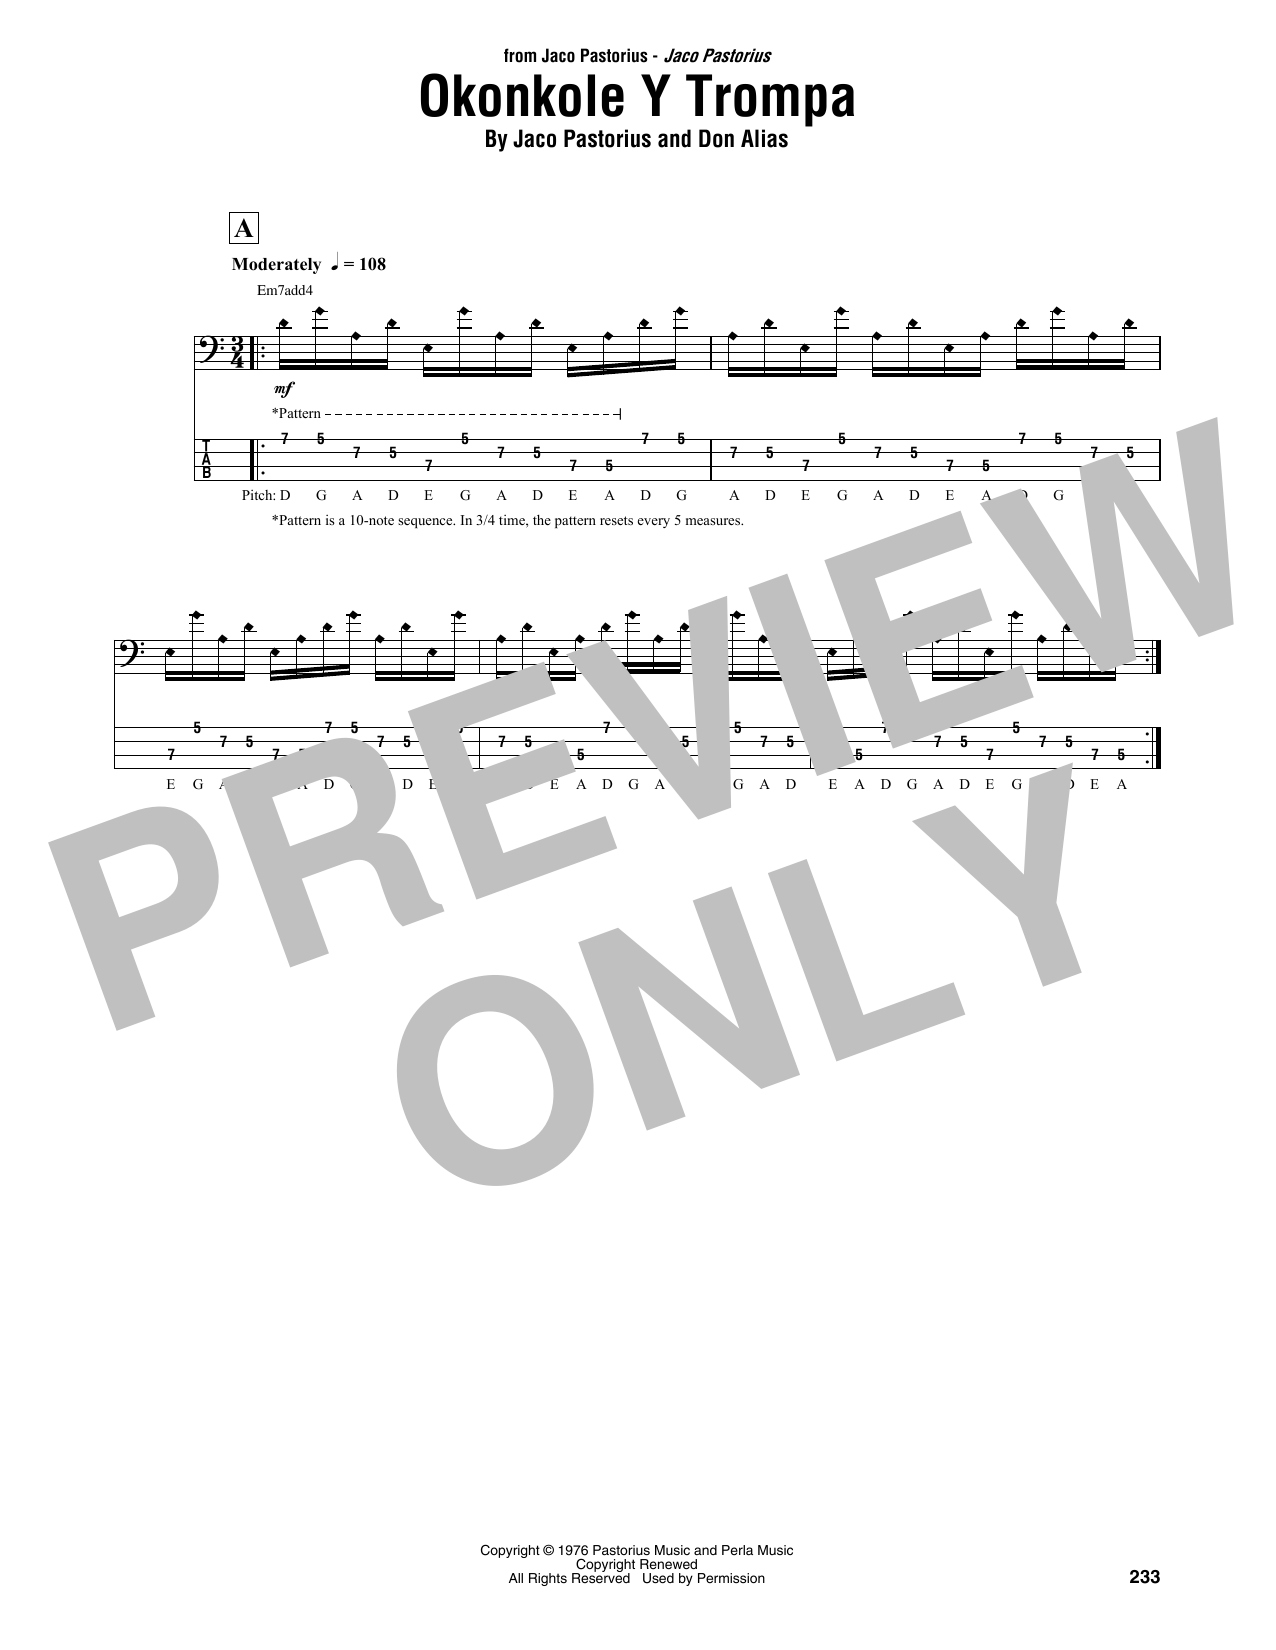 Jaco Pastorius Okonkole Y Trompa Sheet Music Notes & Chords for Bass Guitar Tab - Download or Print PDF